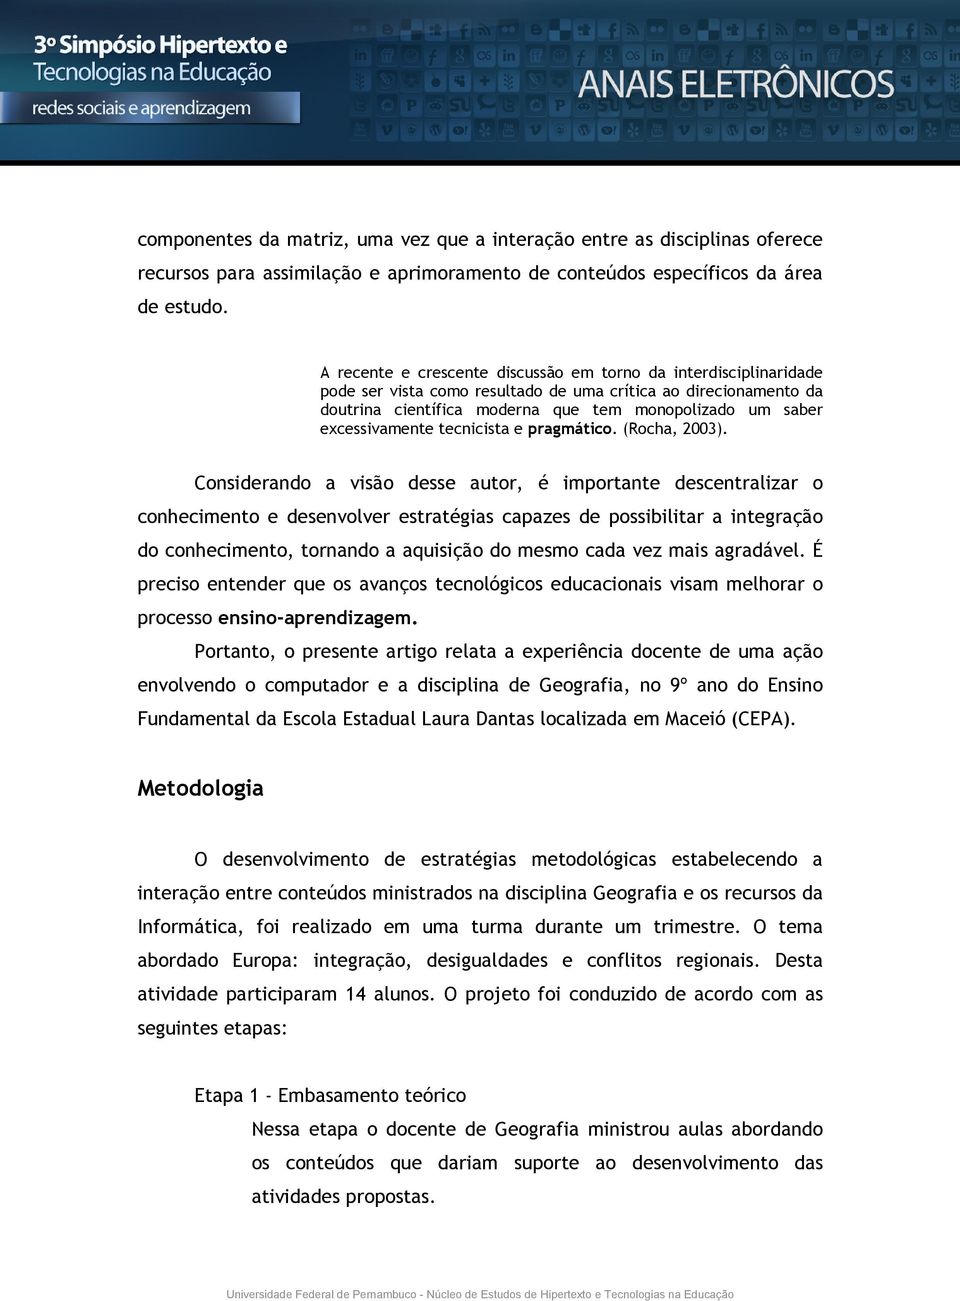 excessivamente tecnicista e pragmático. (Rocha, 2003).